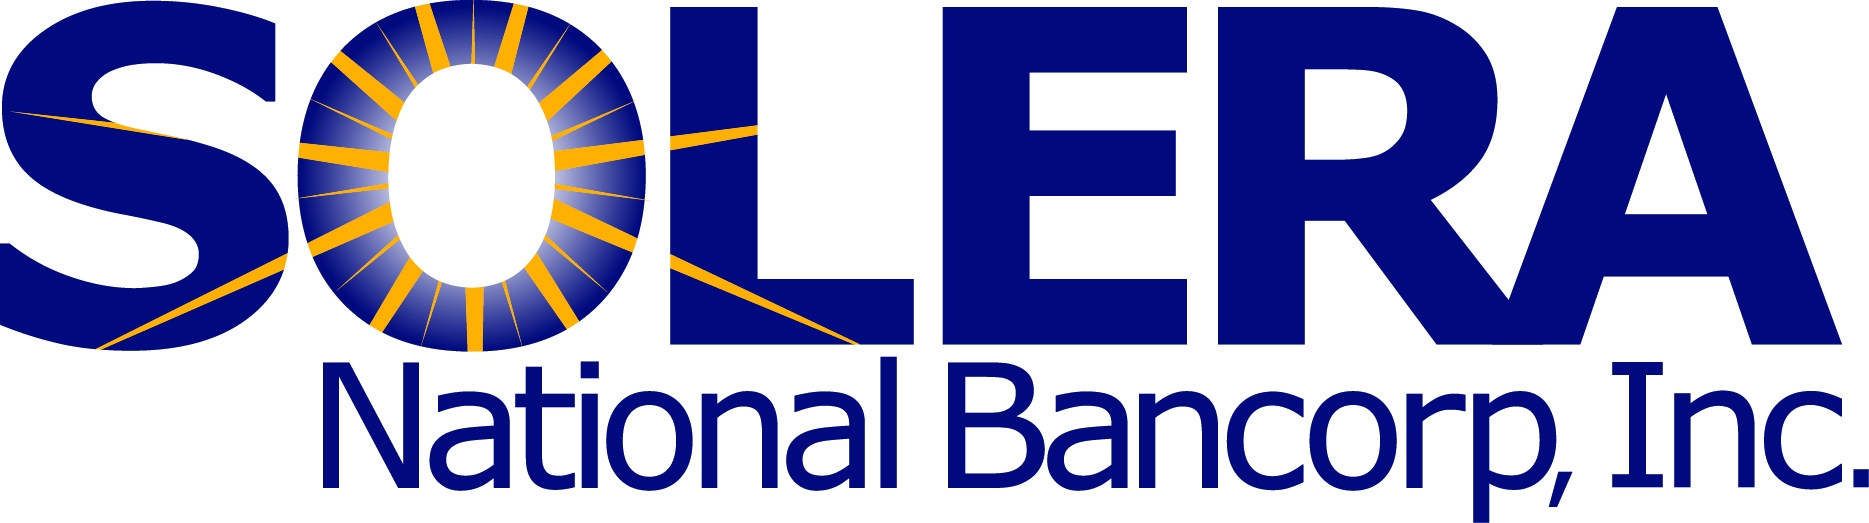 Solera National Bancorp, Inc